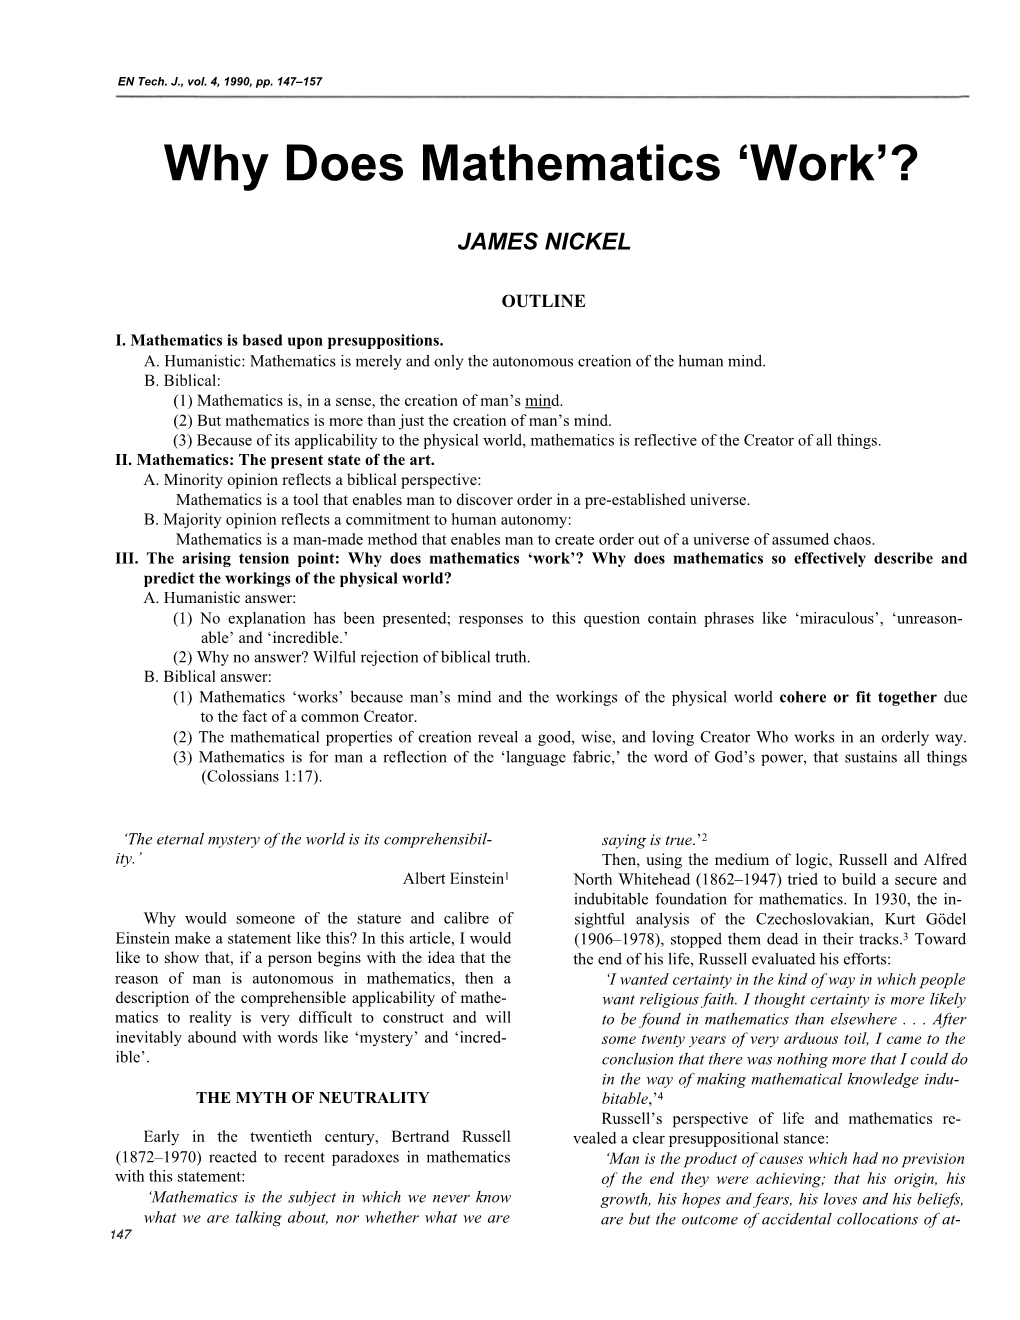 Why Does Mathematics ‘Work’?